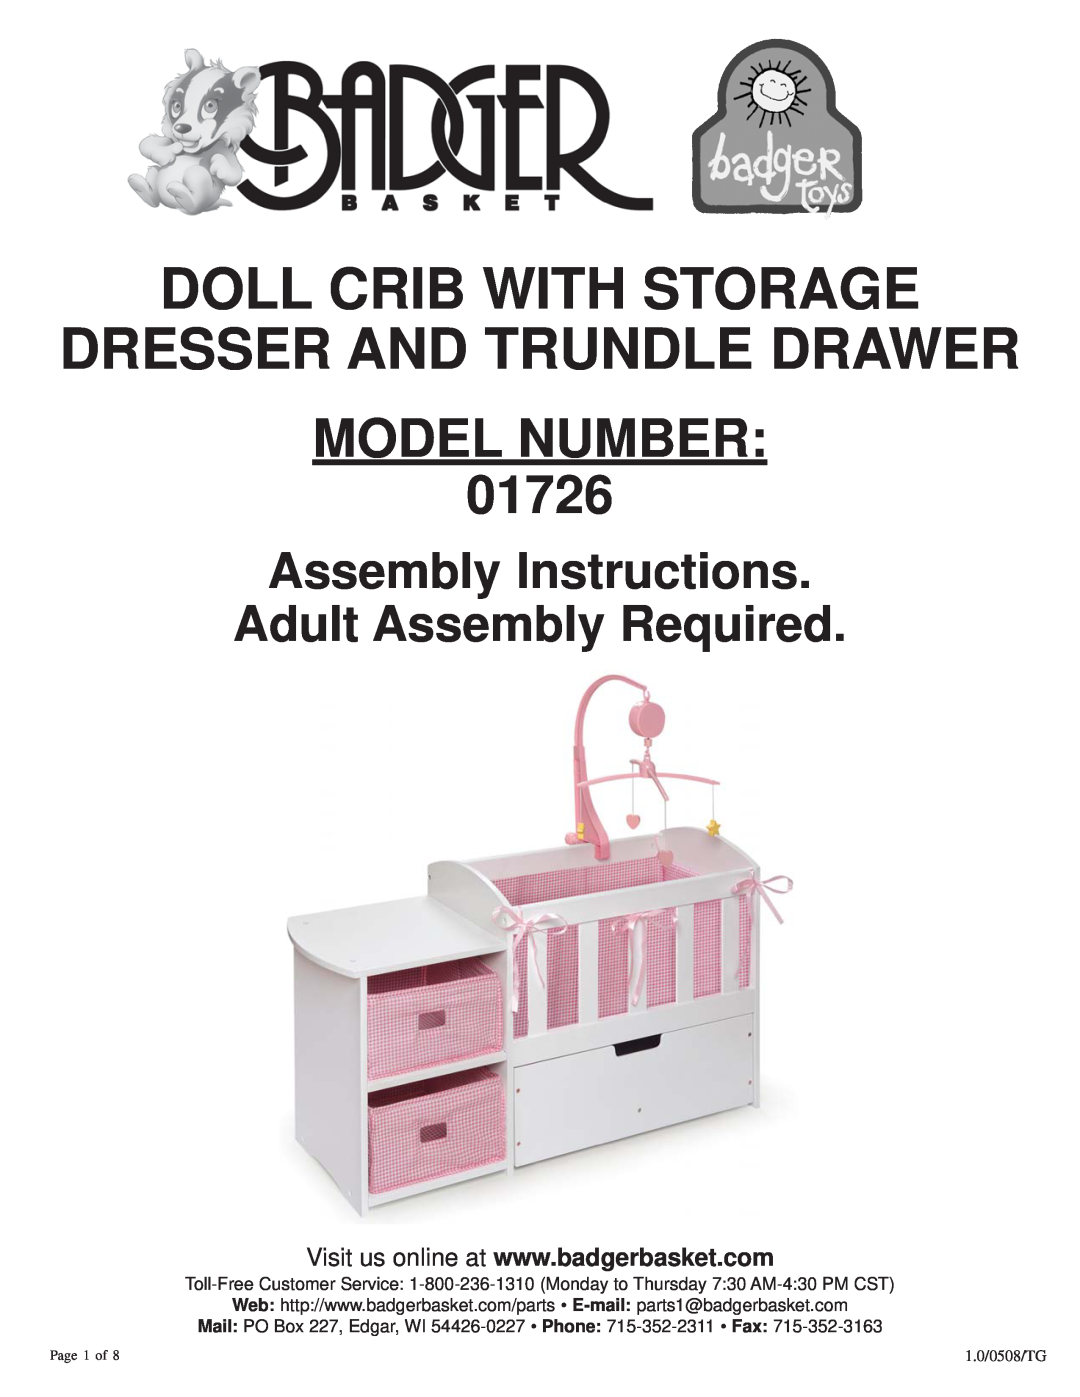 Badger Basket manual Doll Crib With Storage Dresser And Trundle Drawer, MODEL NUMBER 01726, 1.0/0508/TG, Page 1 of 